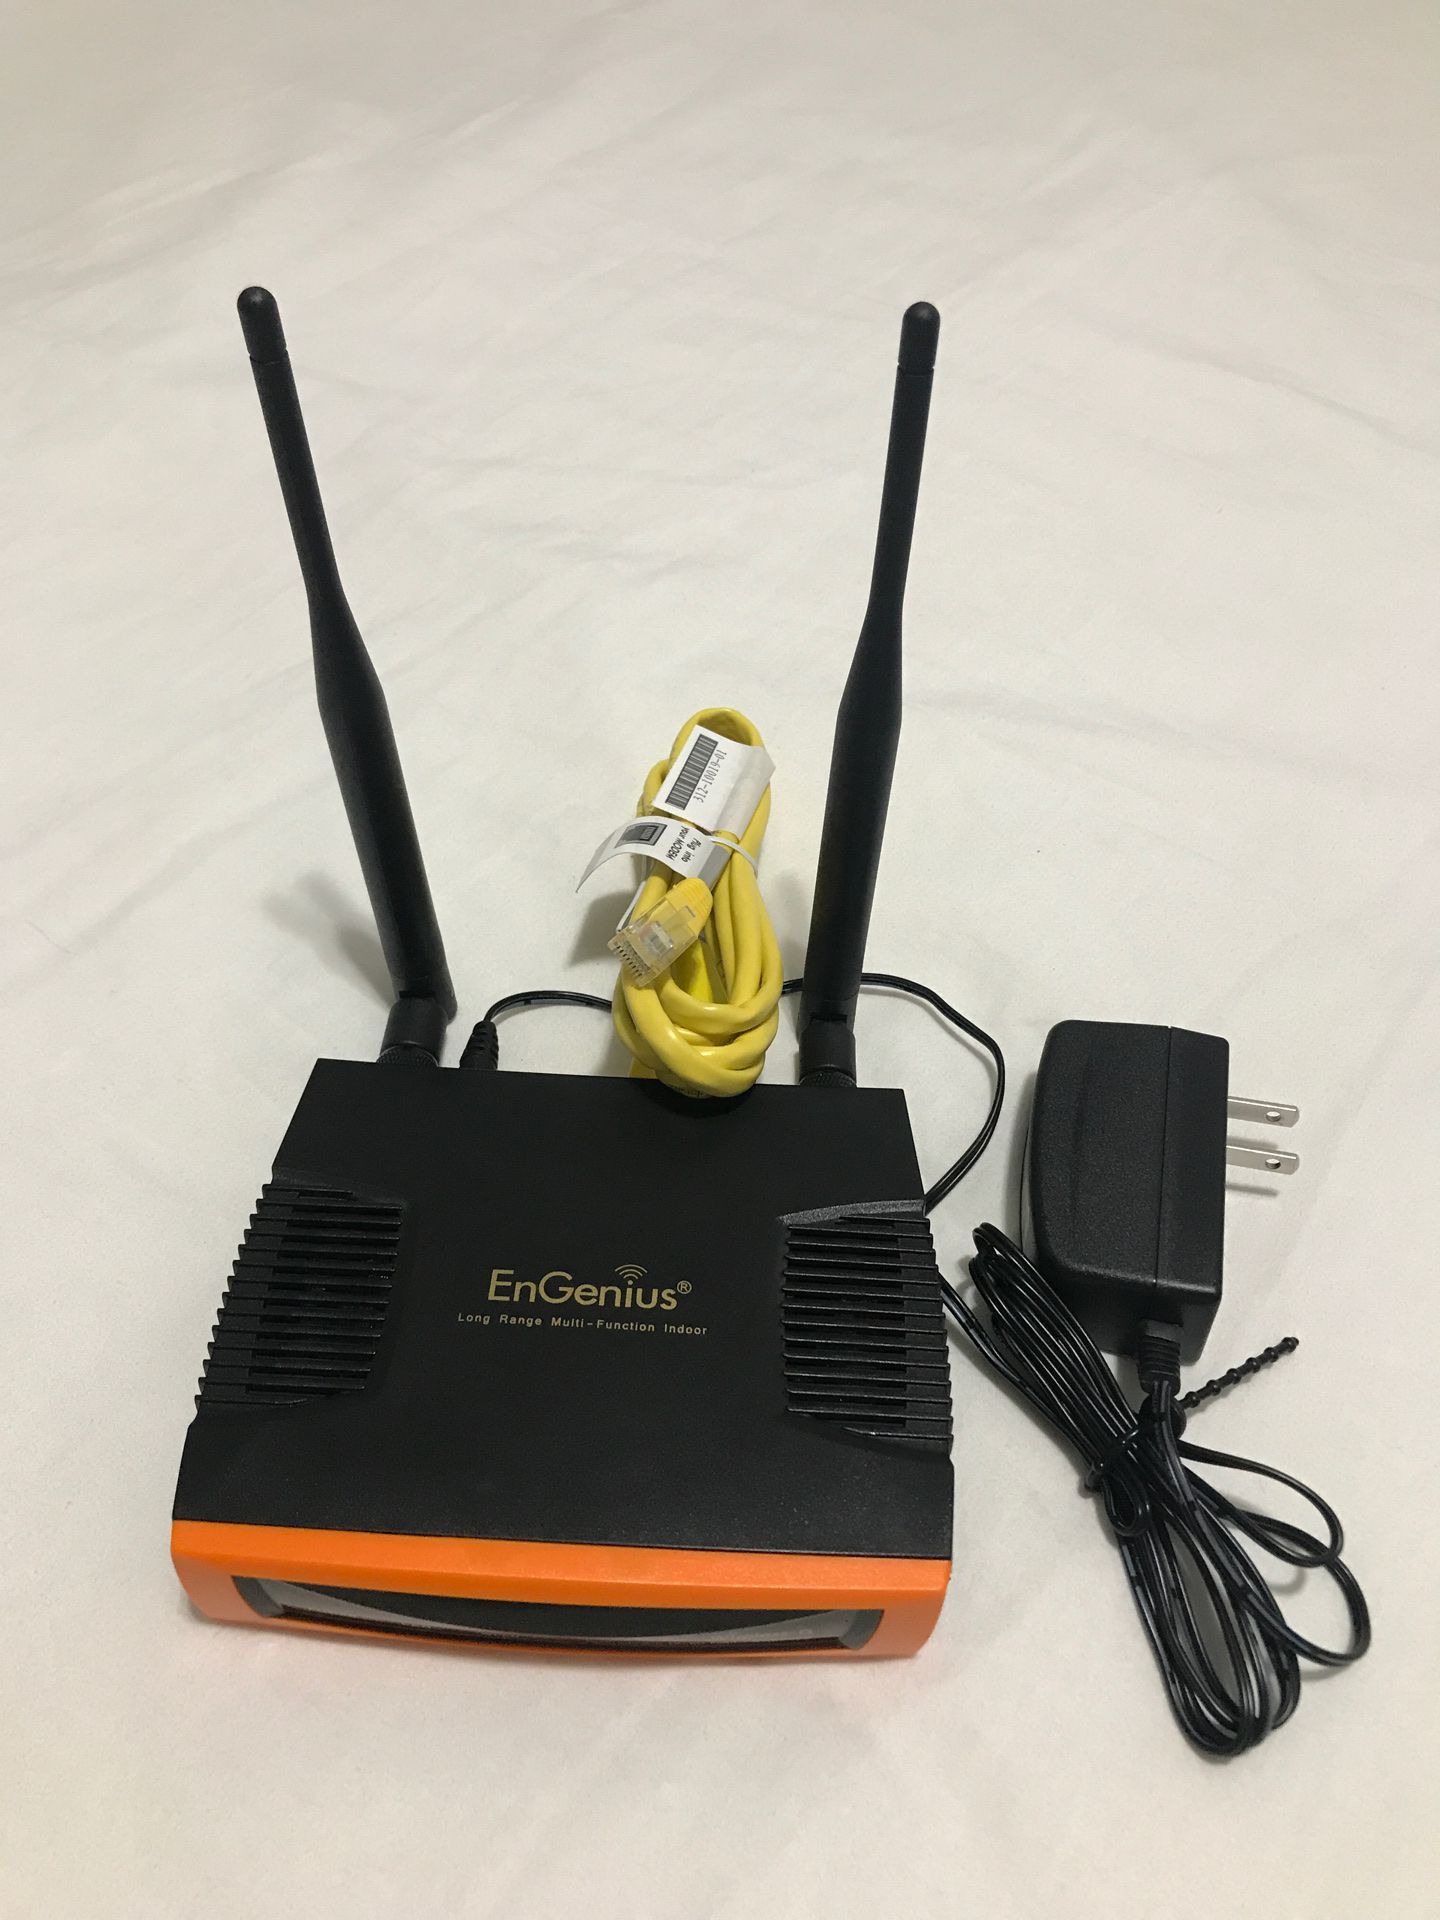 EnGenius Long Range WiFi/router